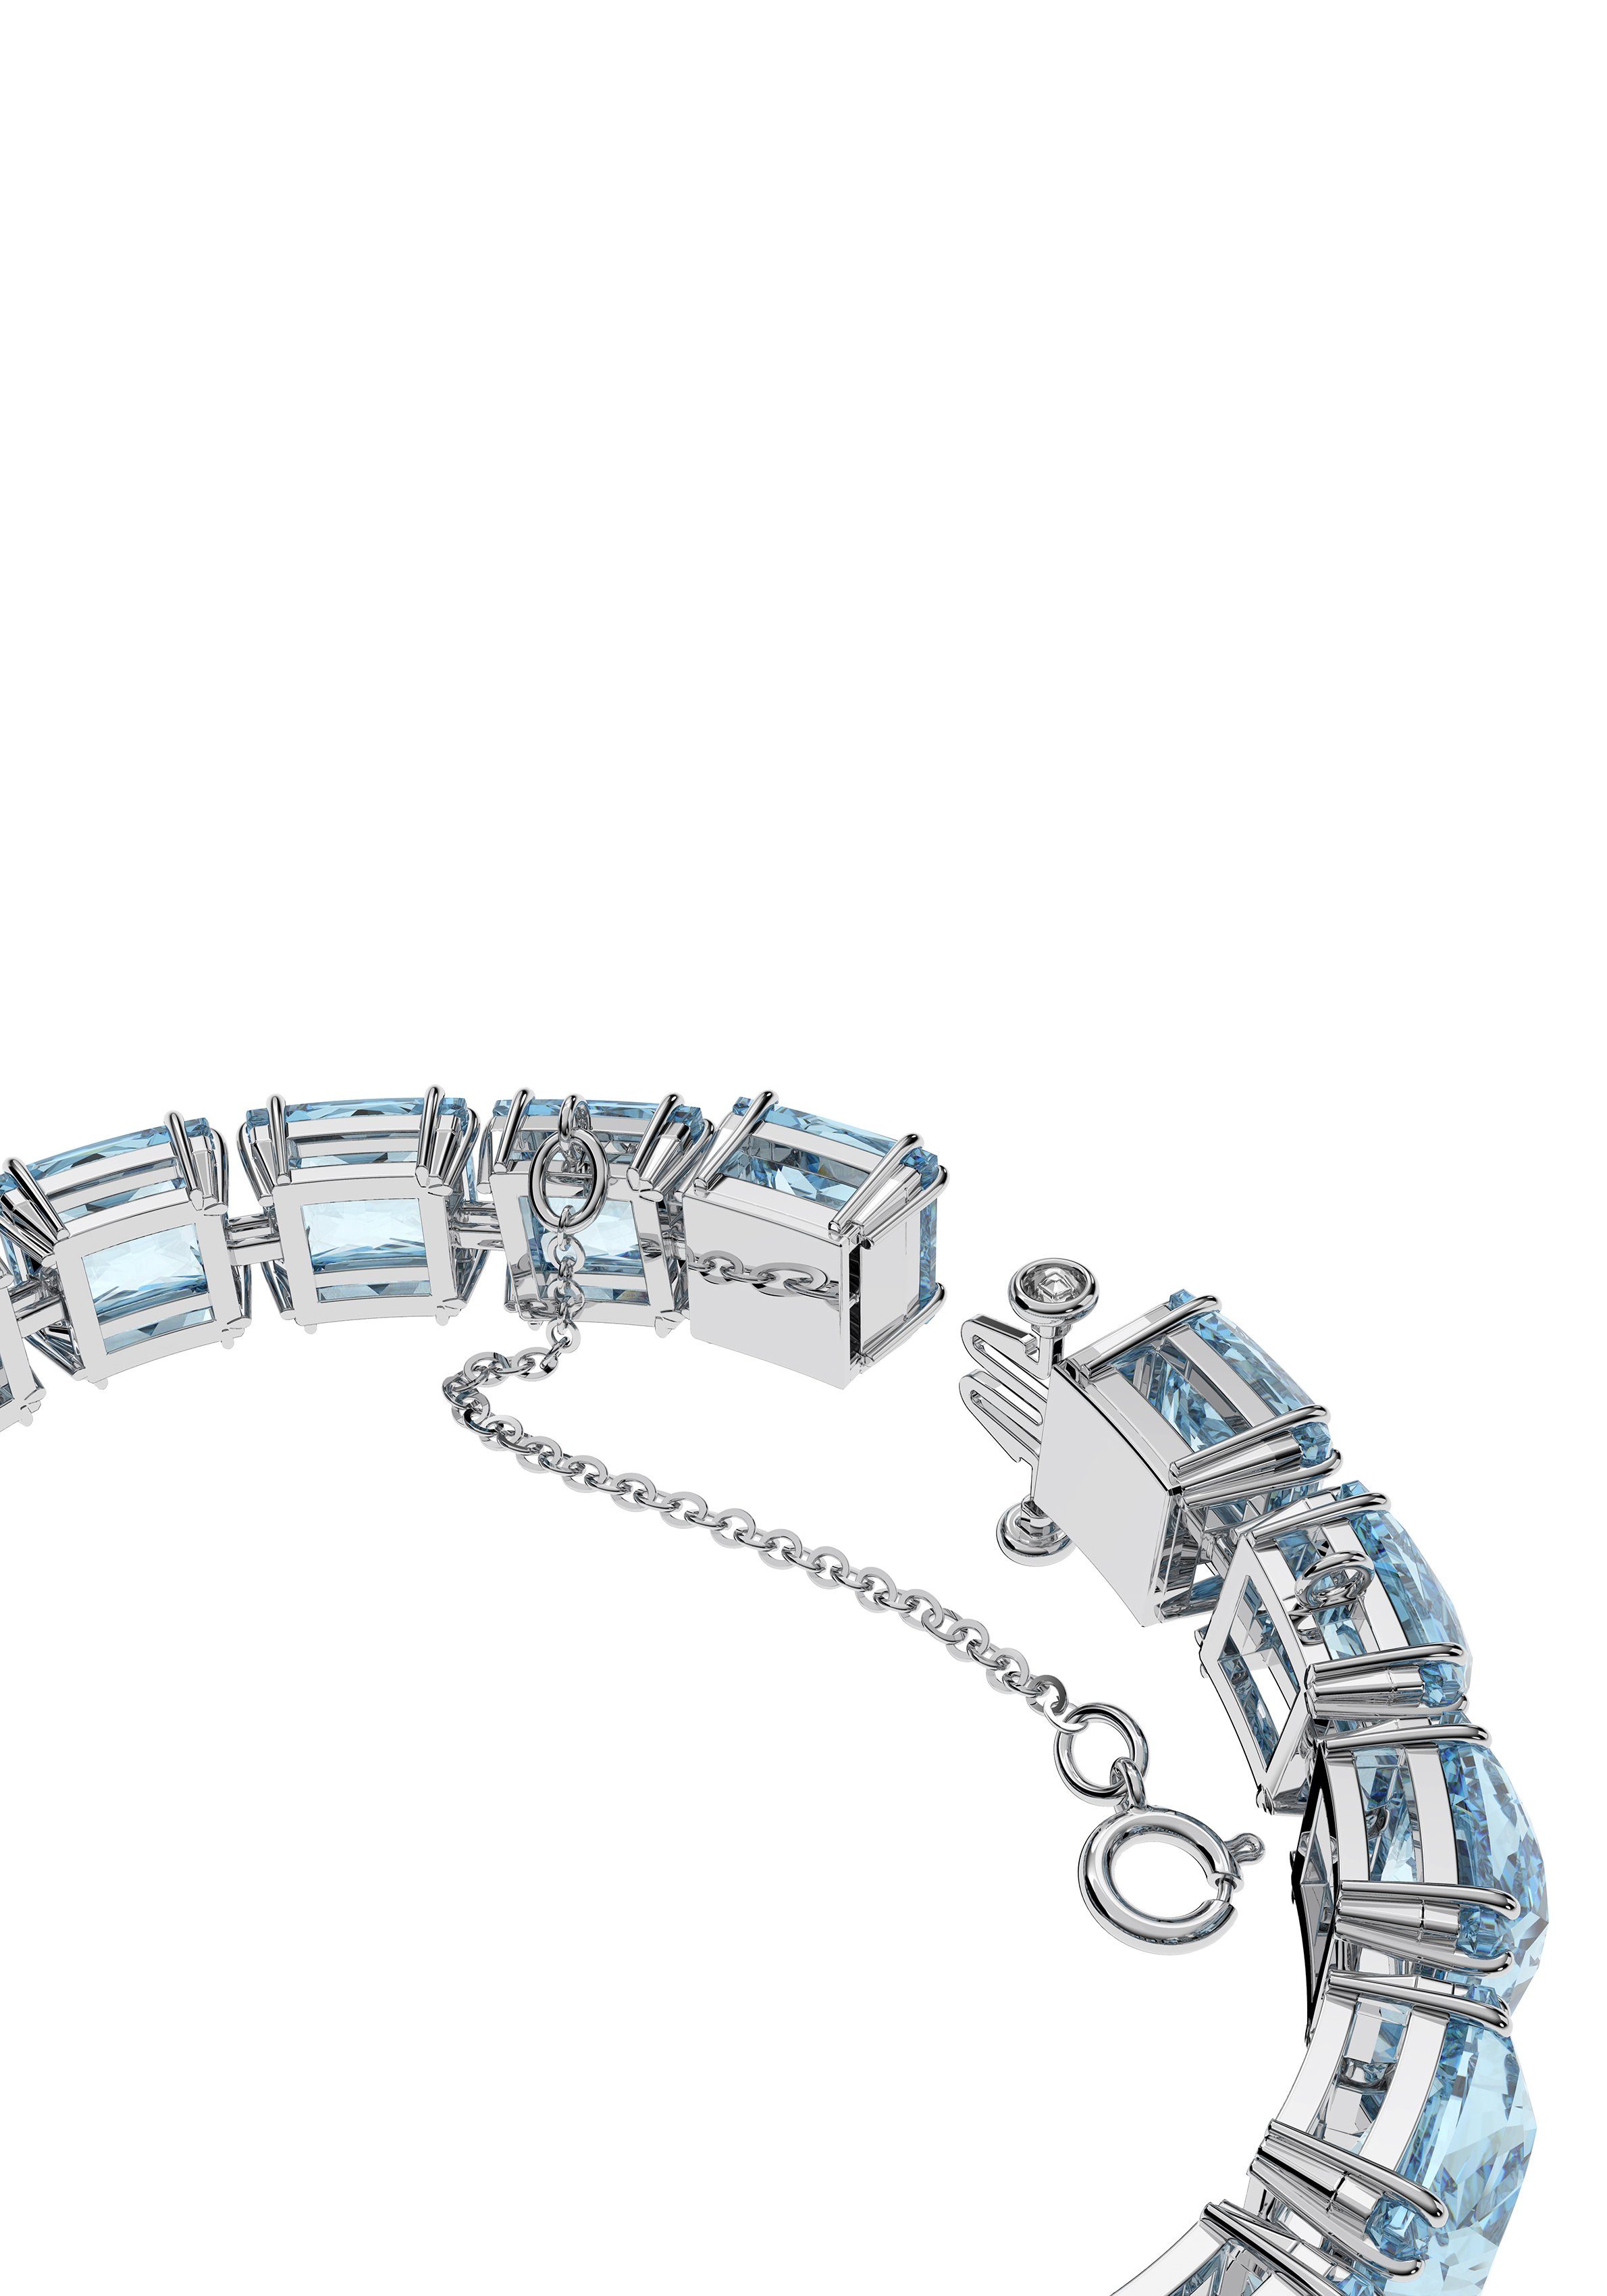 Swarovski Armband Millenia, 5612682, mit Swarovski® Kristall Quadrat Kristalle 5614924, Schliff, metallfarben-blau im